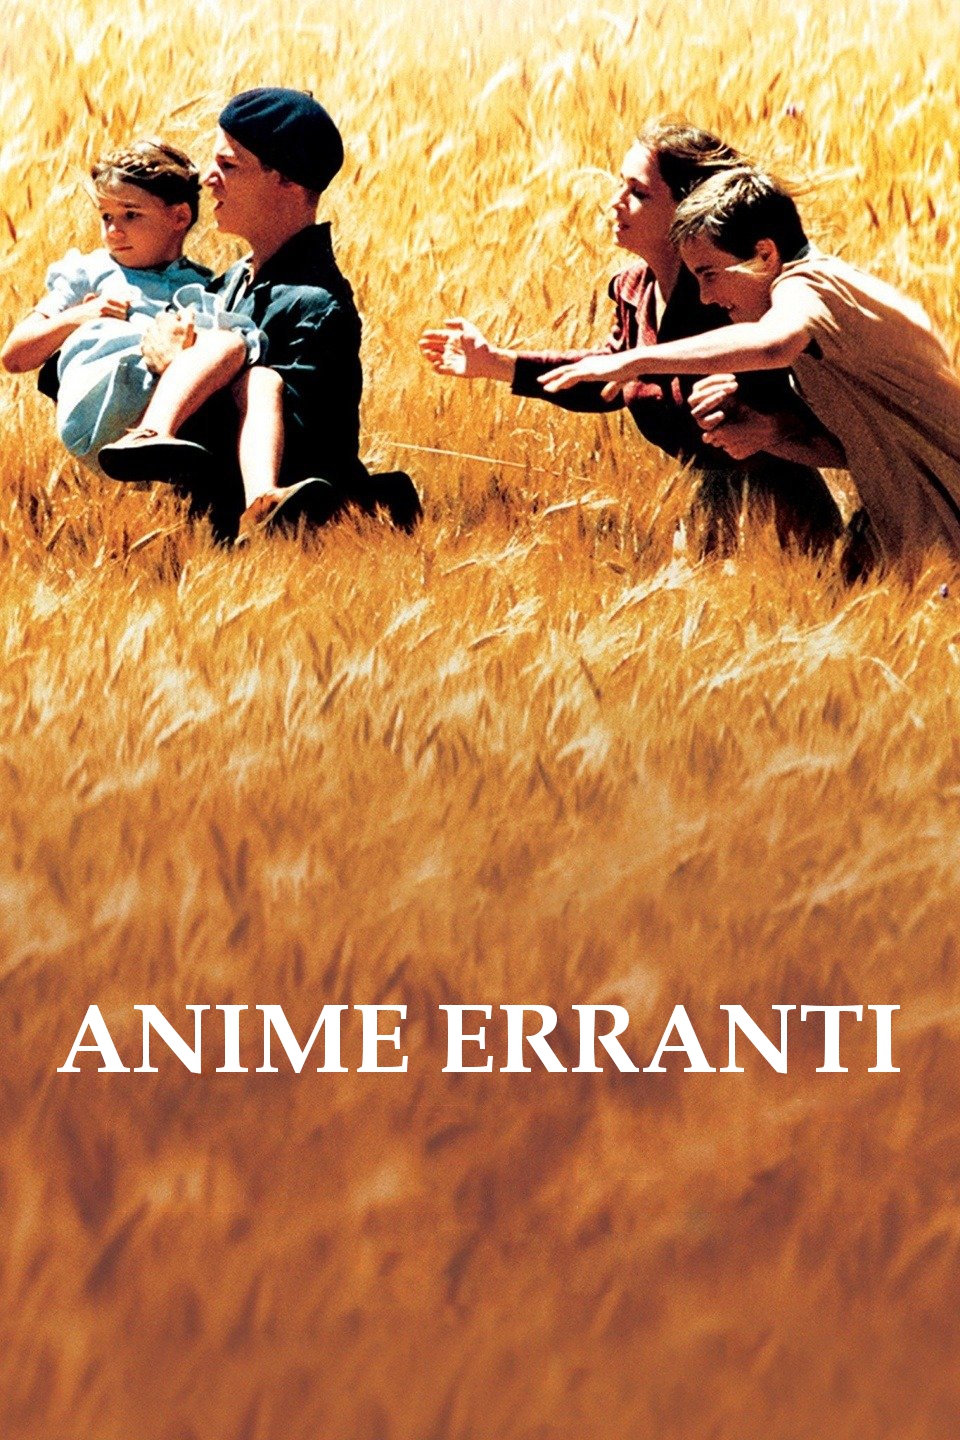 Anime erranti (2003)